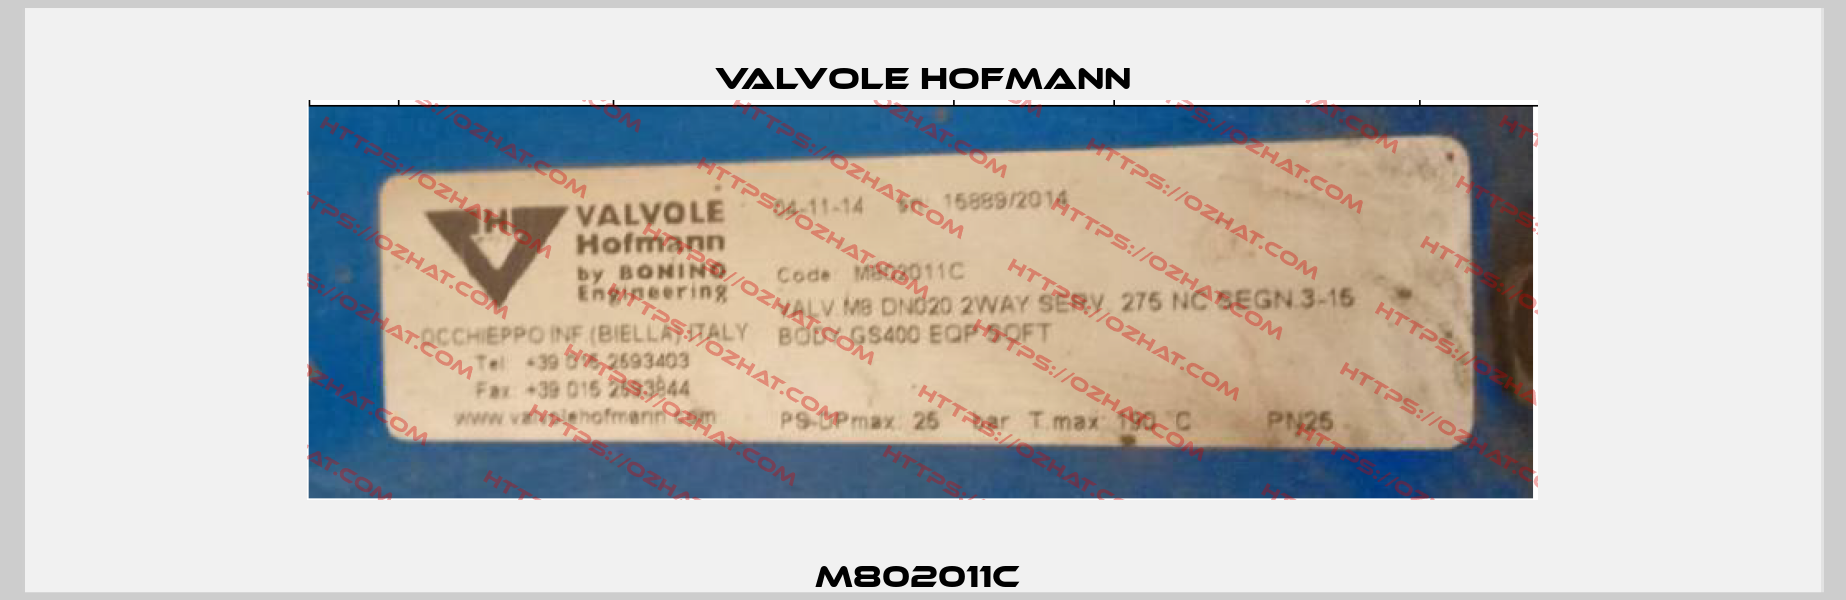 M802011C  Valvole Hofmann